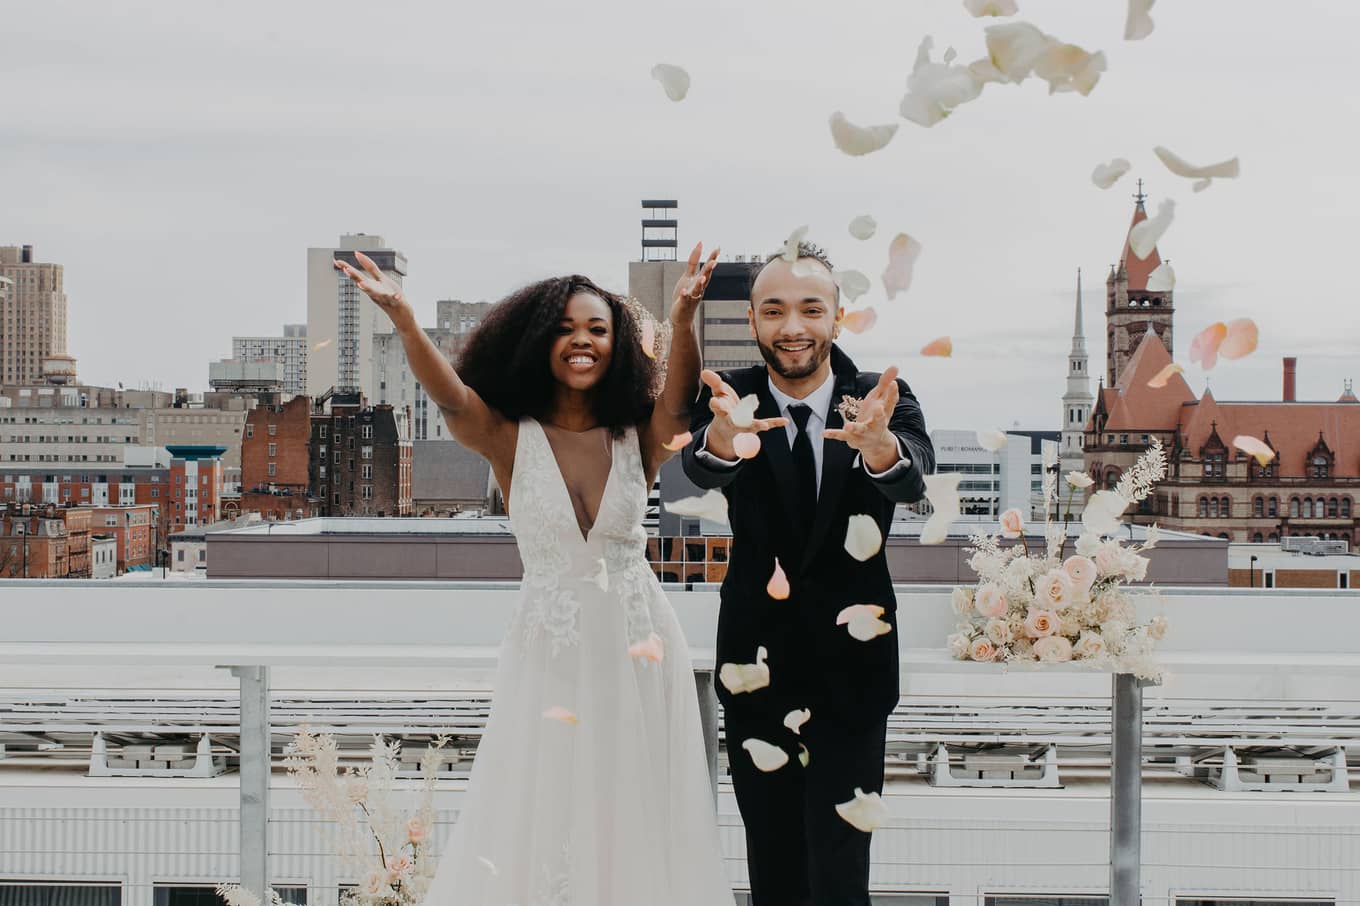 wedding scene with bride and groom, confetti falling